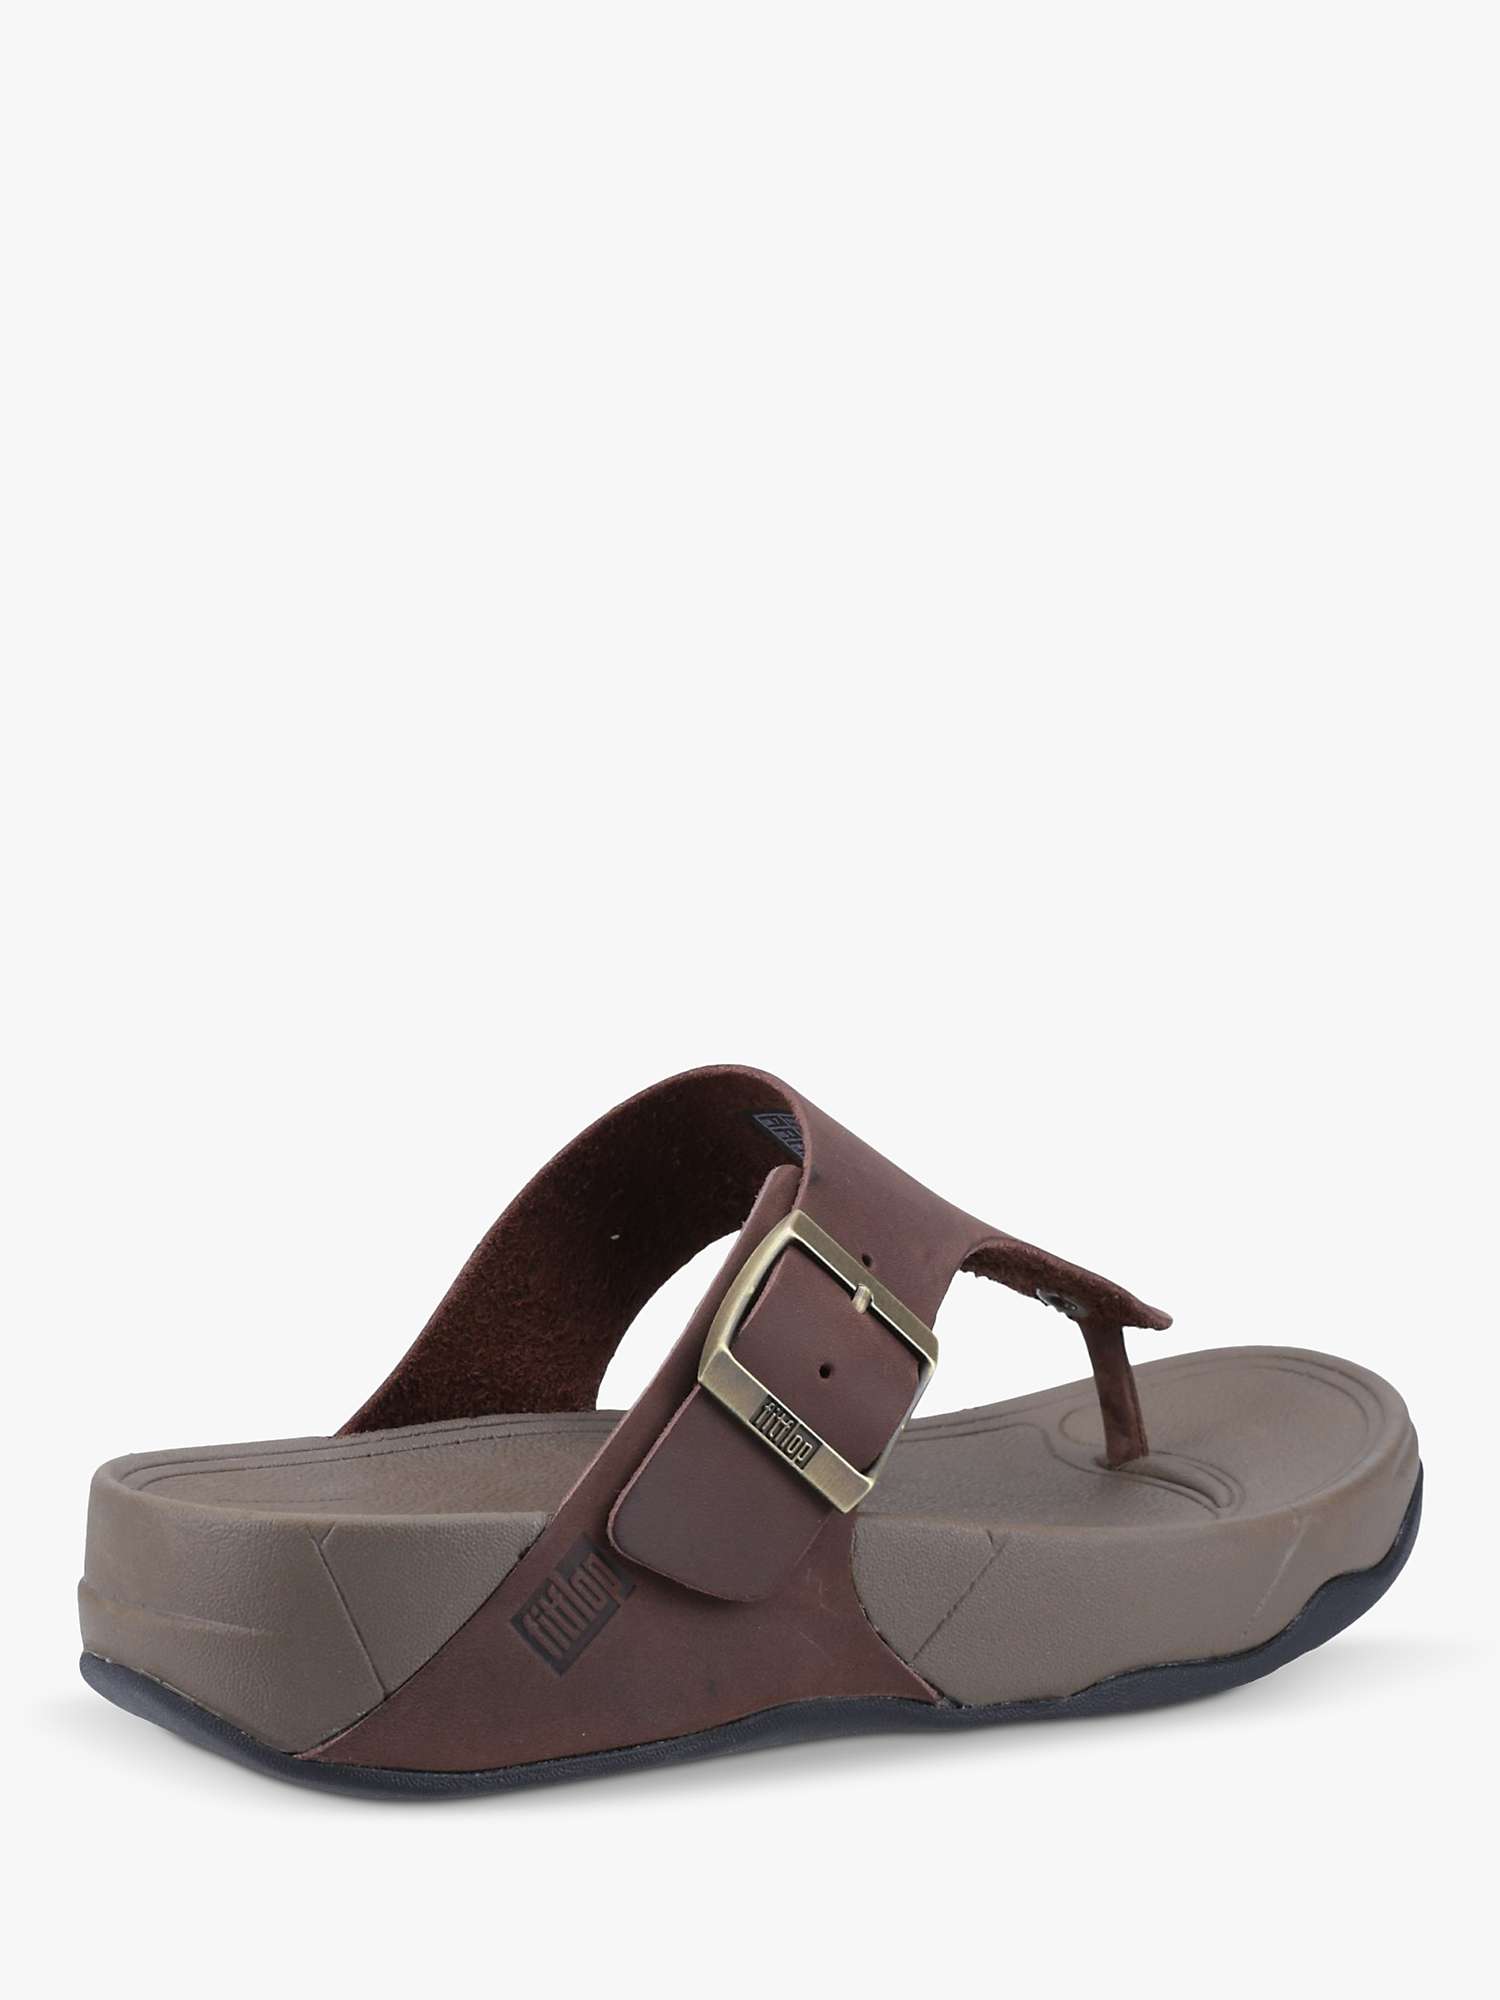 Buy FitFlop Trakk II Leather Sandals Online at johnlewis.com